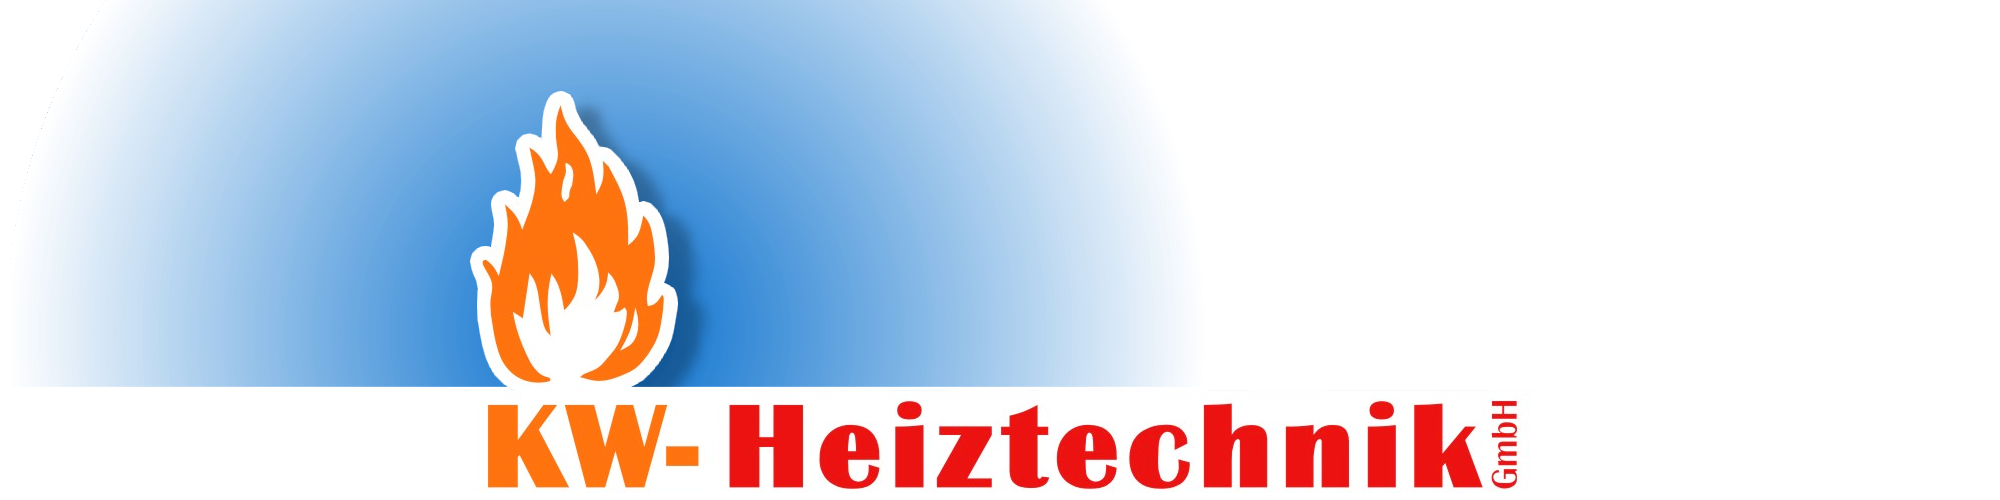 KW Heiztechnik Logo